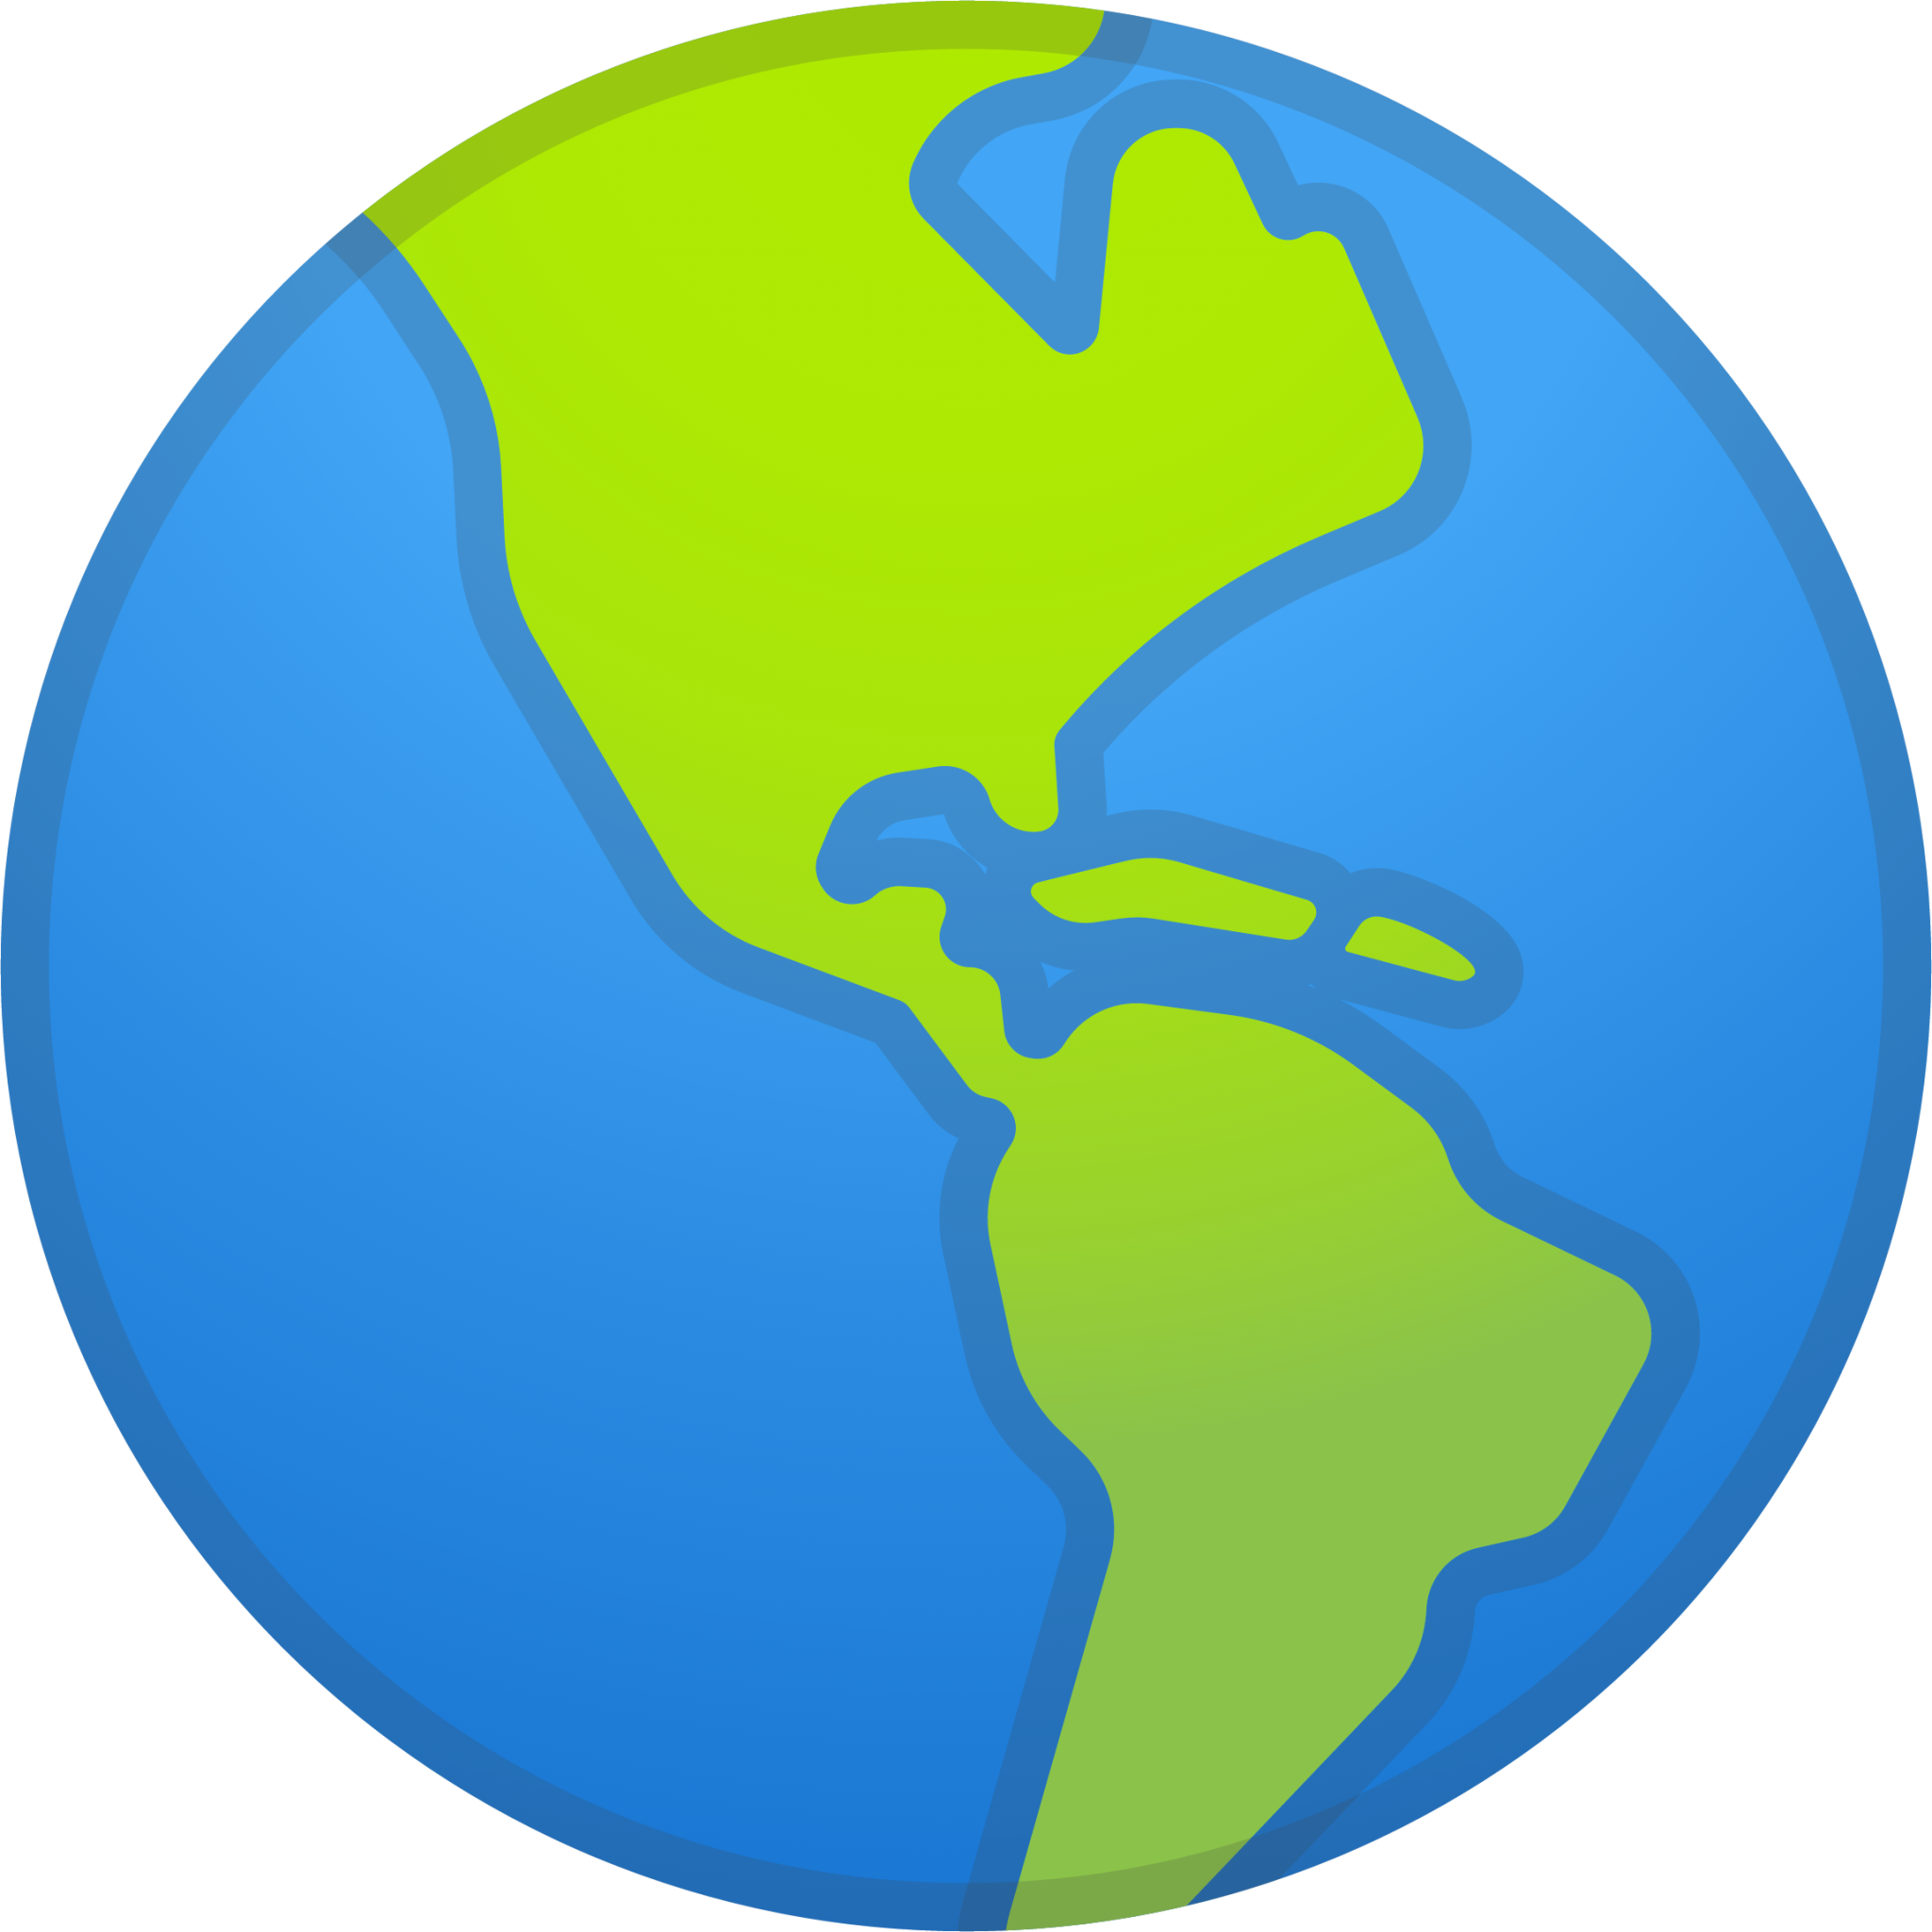 globe showing Americas emoji